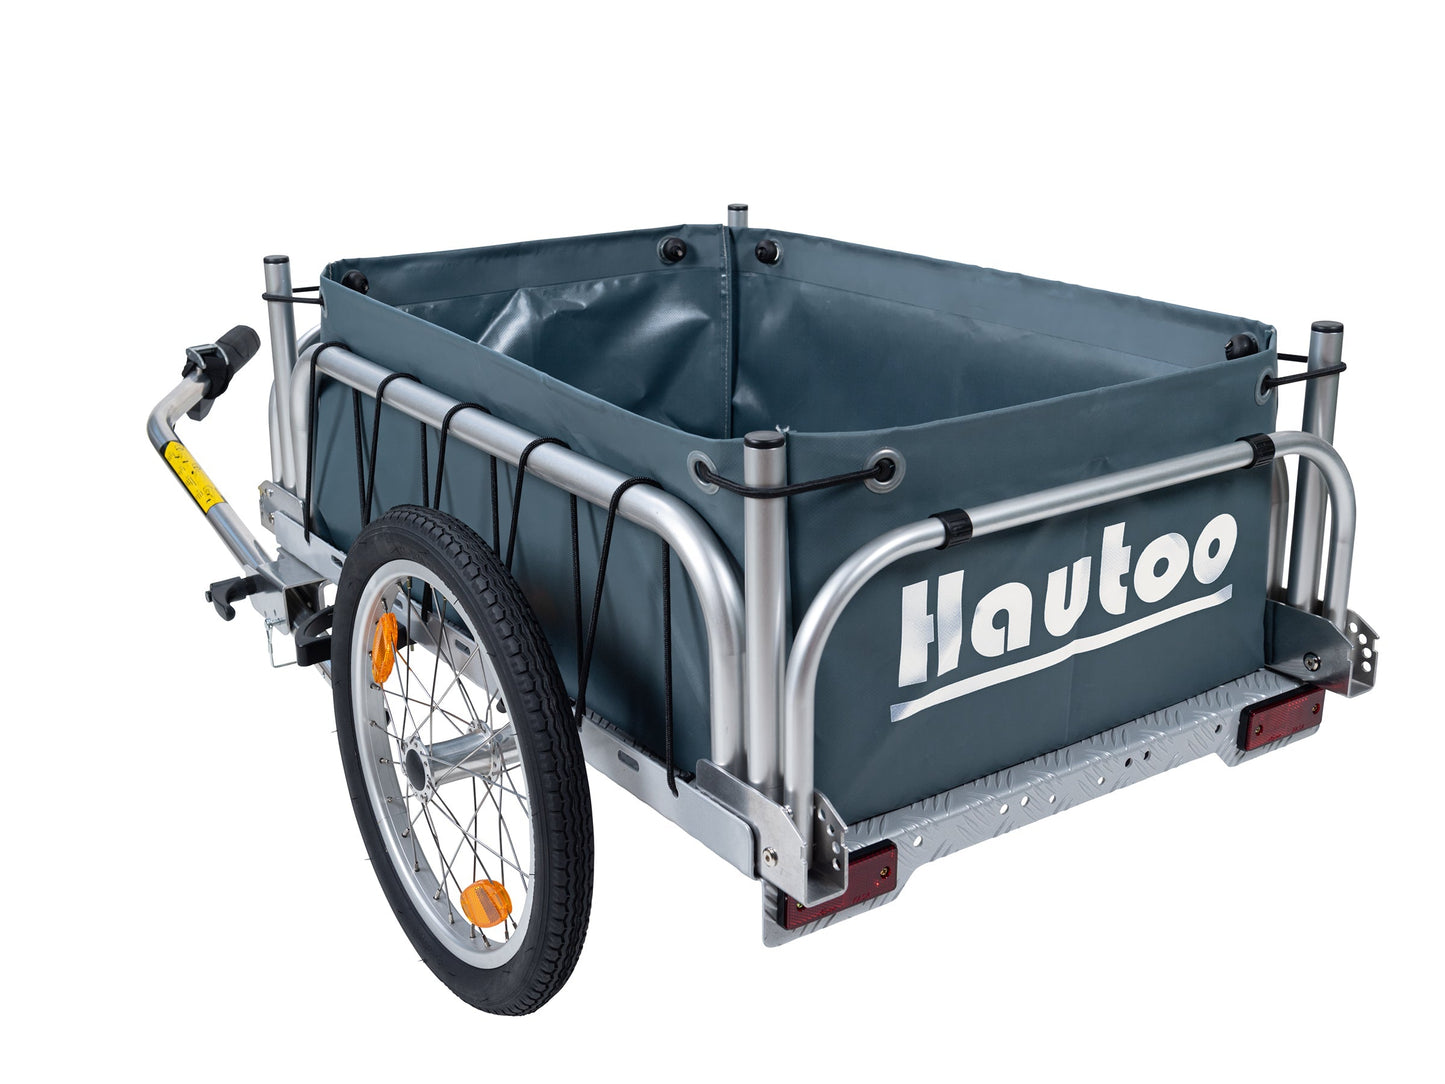 HAUTOO Modell ONE Set: Fahrrad-Lastenanhänger mit Transporttasche un